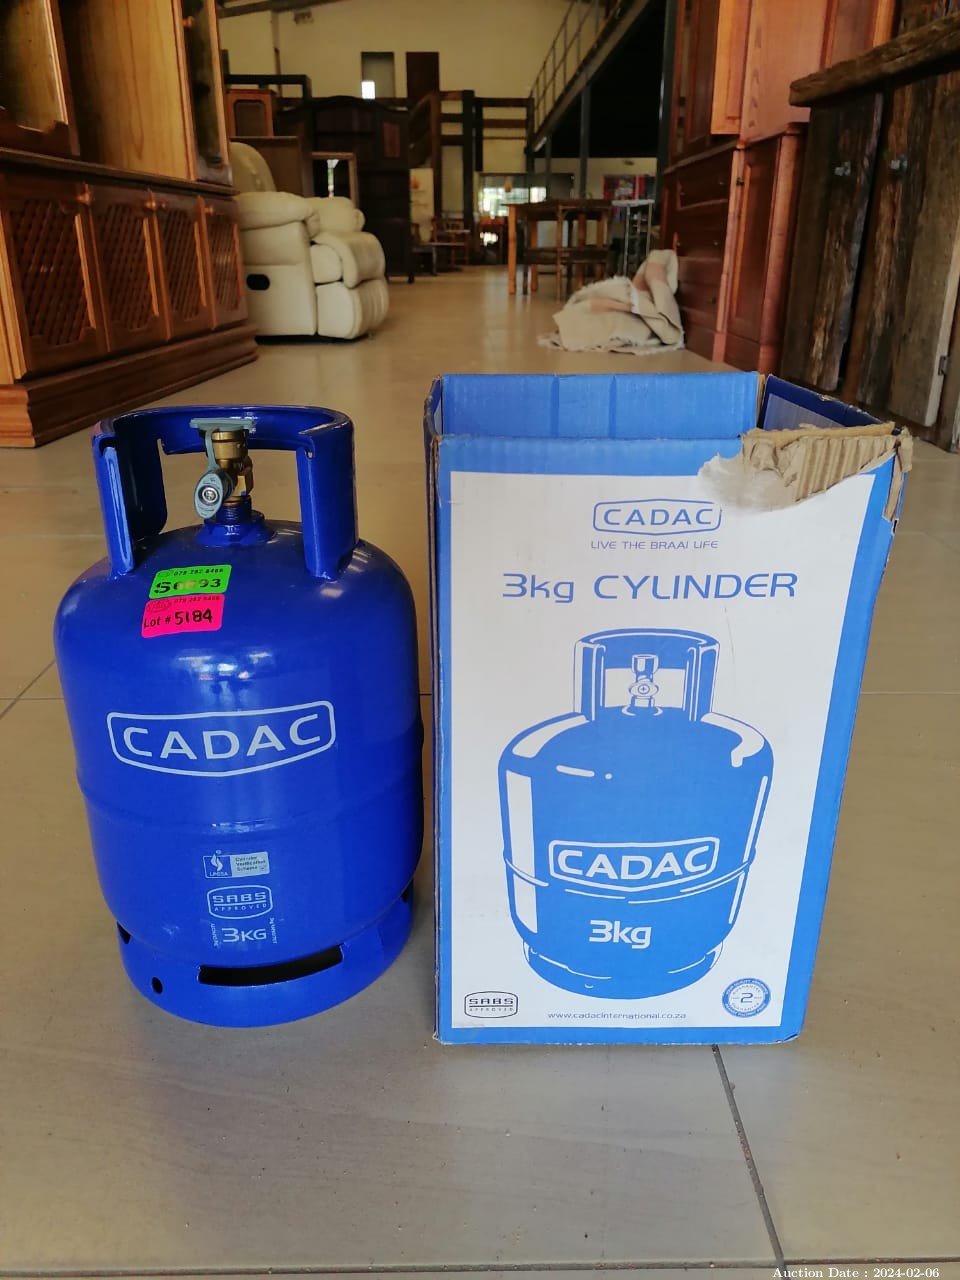 5184 - Cadac No 3 Gas Cyclinder